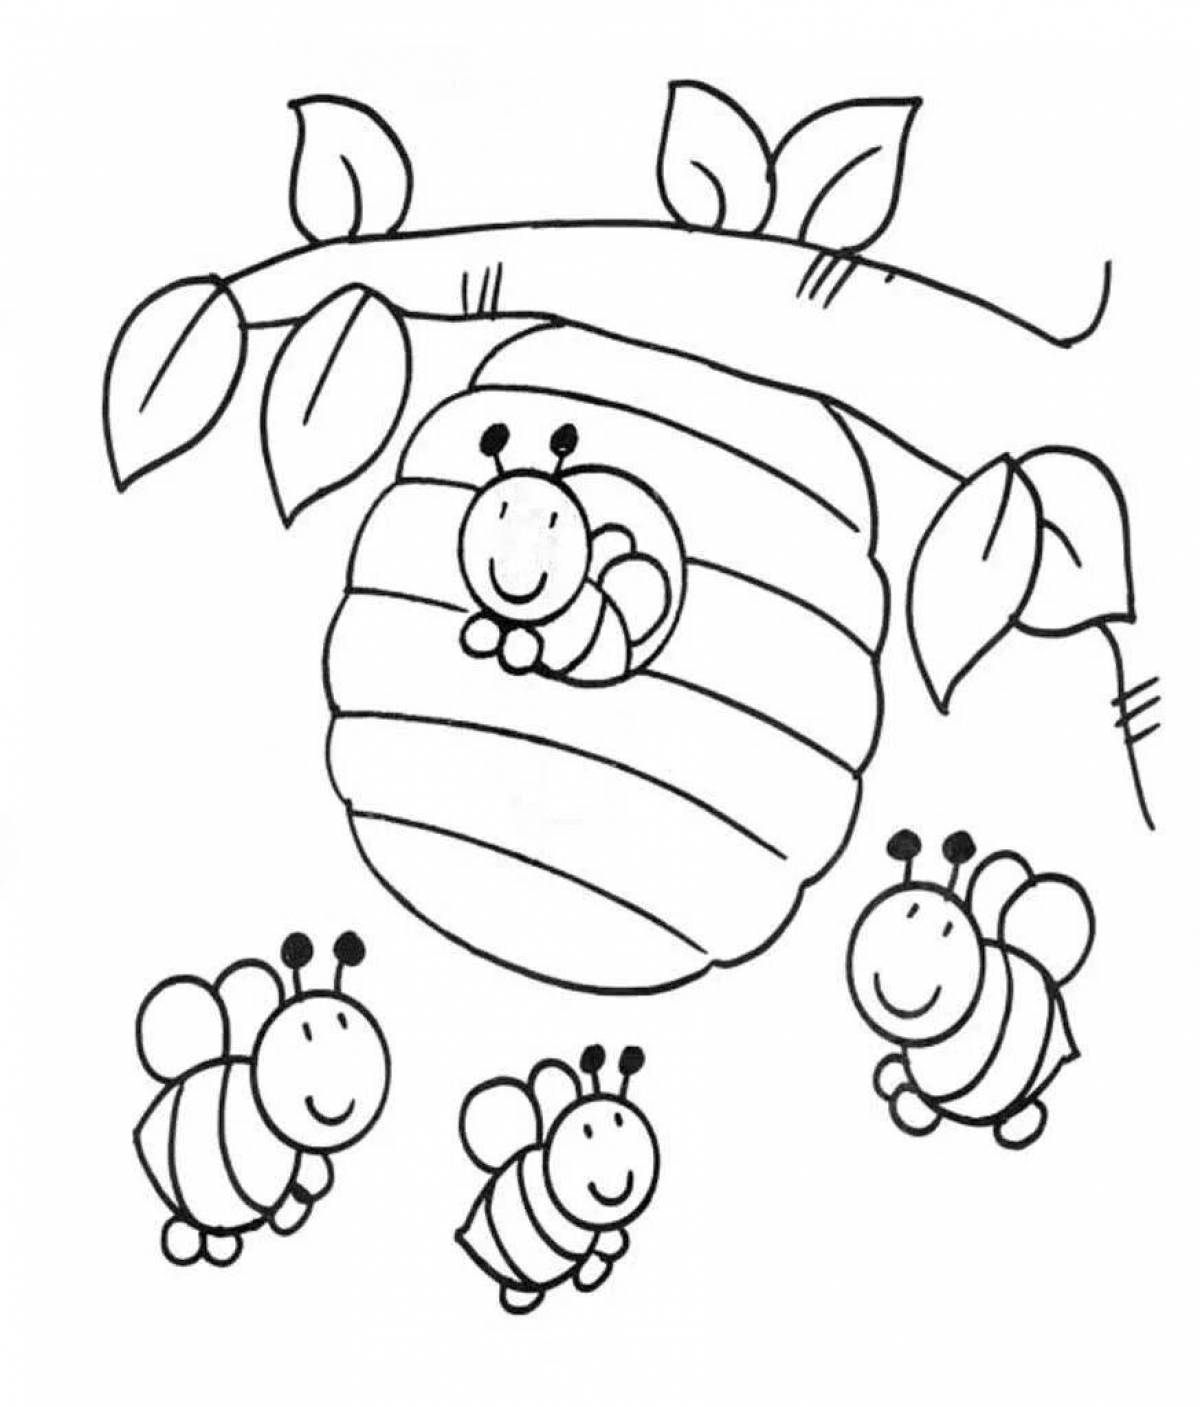 Fancy beekeeper coloring book